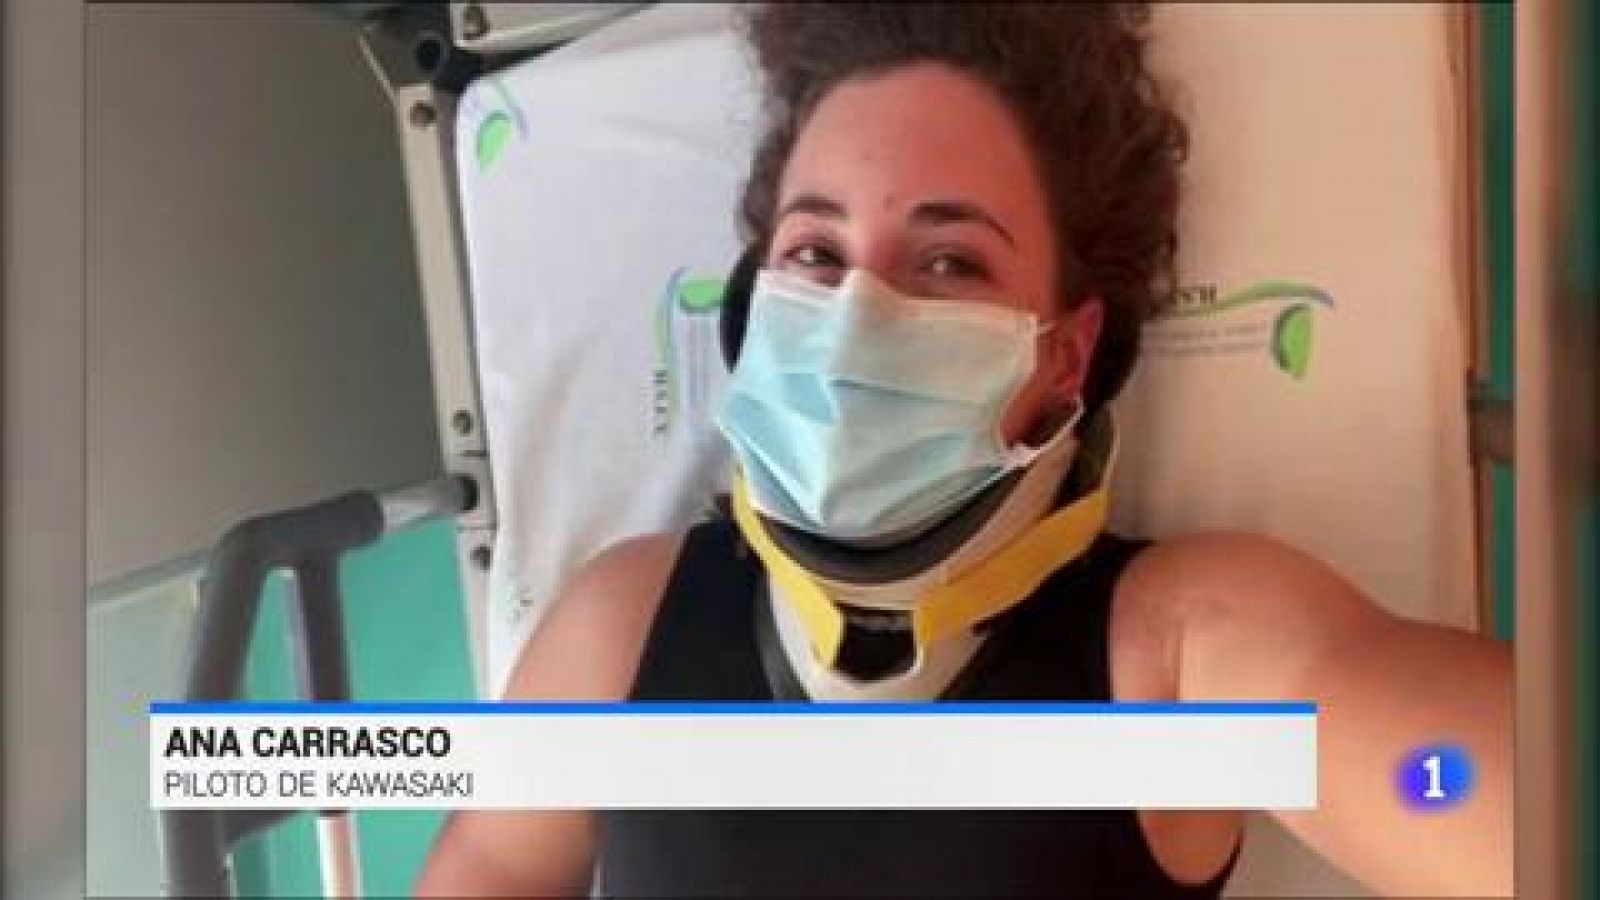 WSBK 2020 | Ana Carraso sufre una doble fractura de vértebras